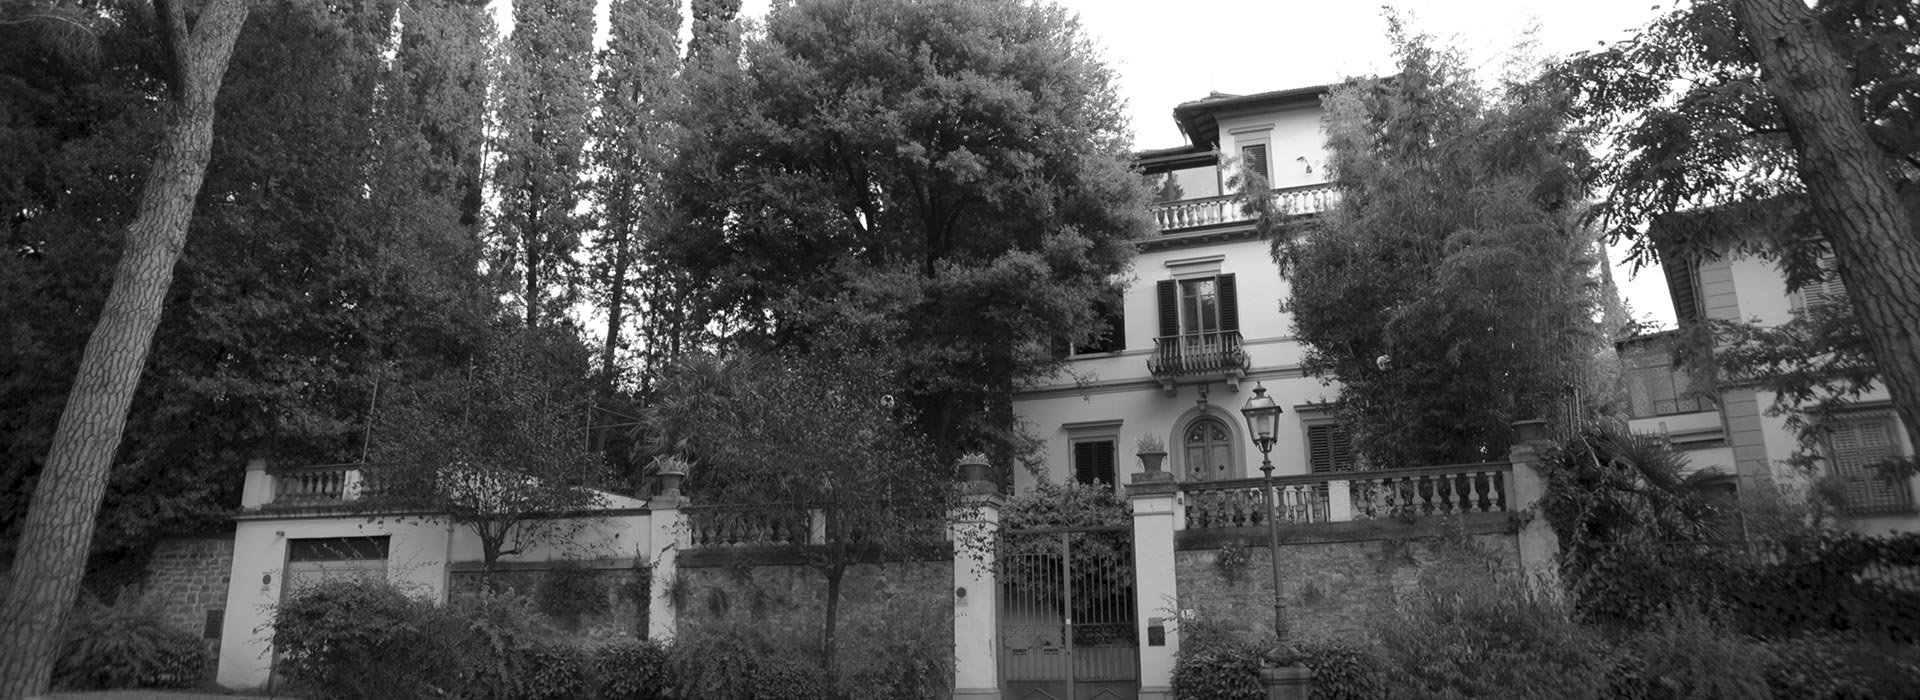 Studio Legale Sebastiani e Associati Studio legale in Firenze dal 1947